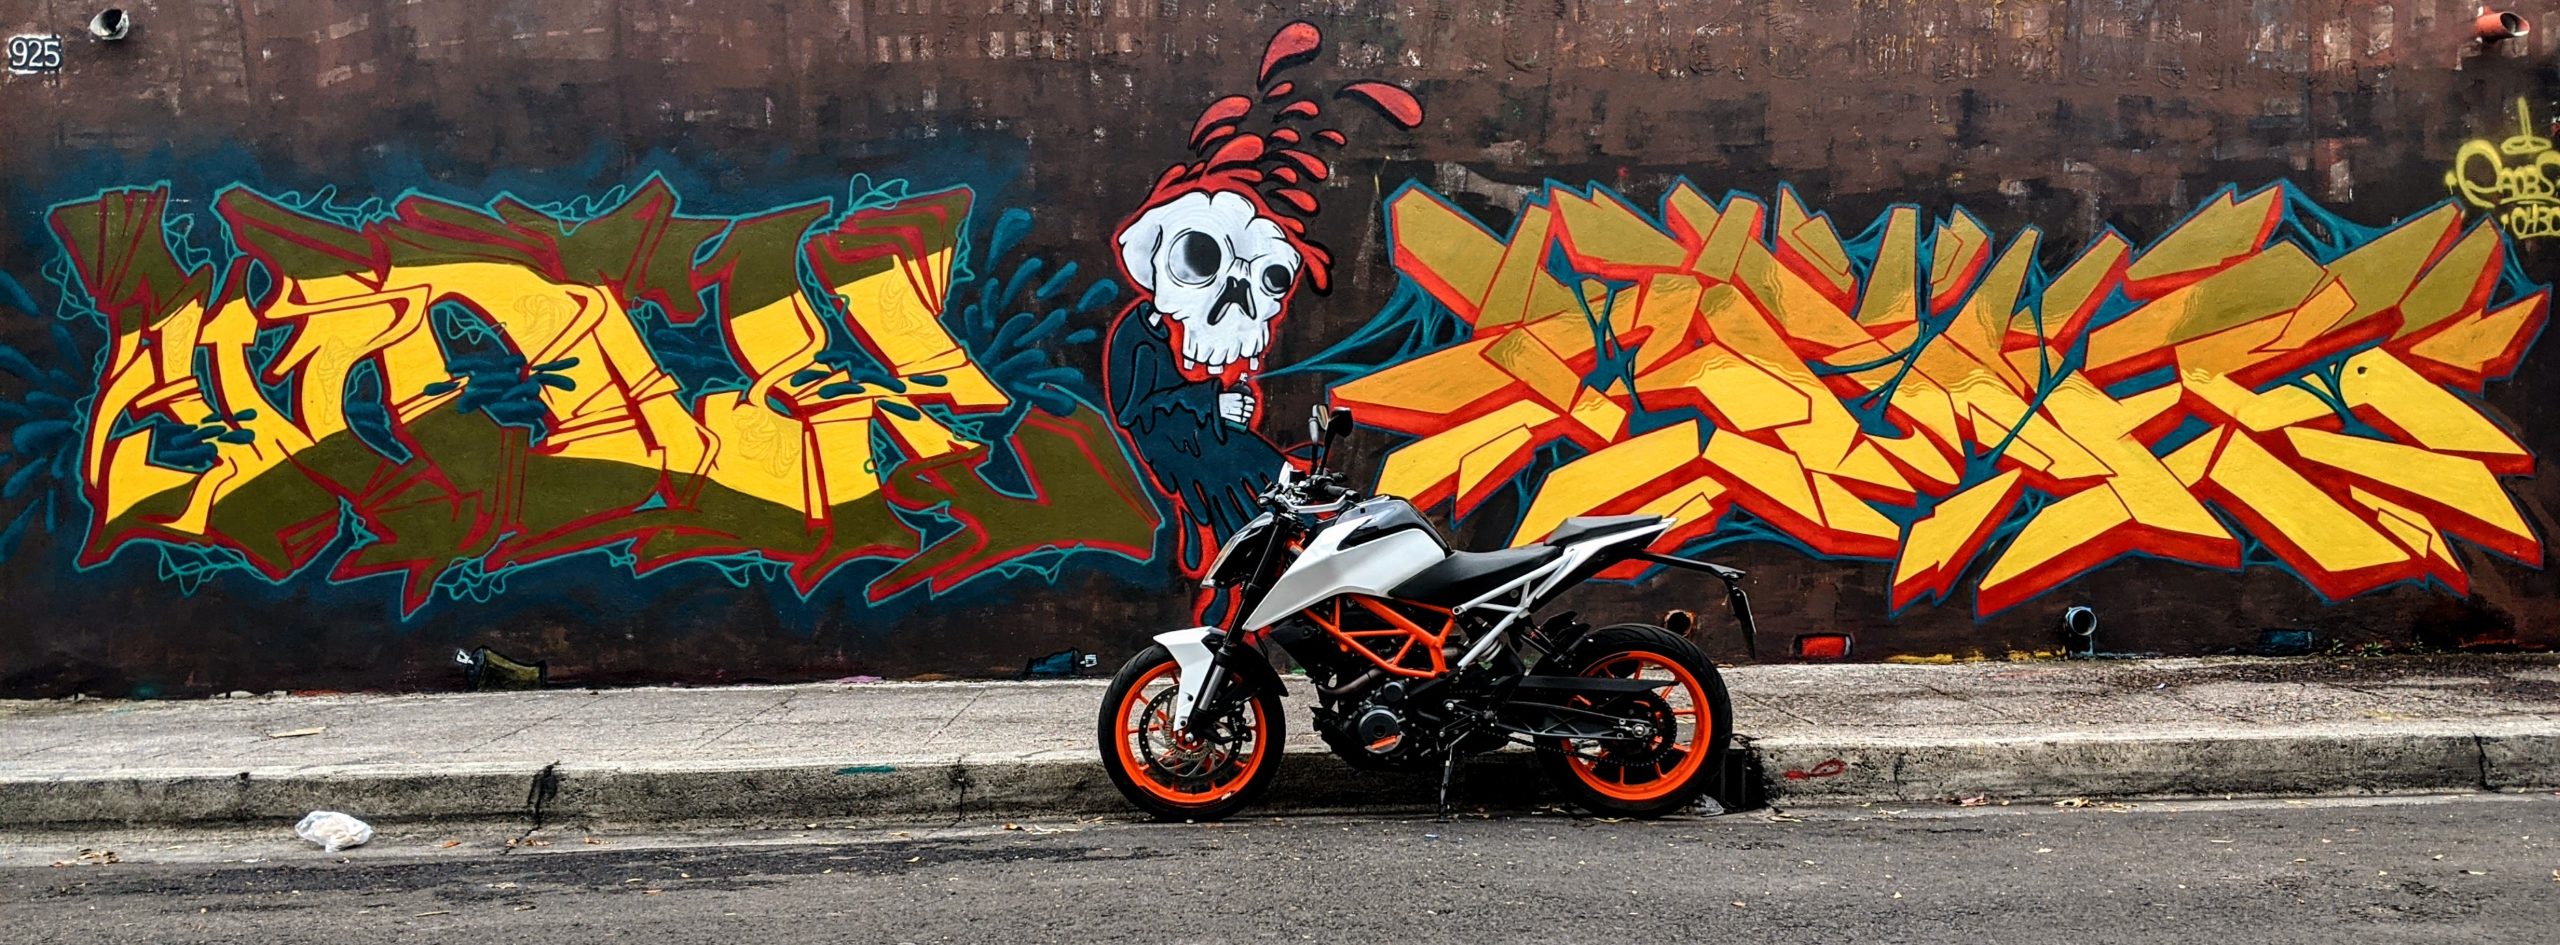 Grafiti & Motos